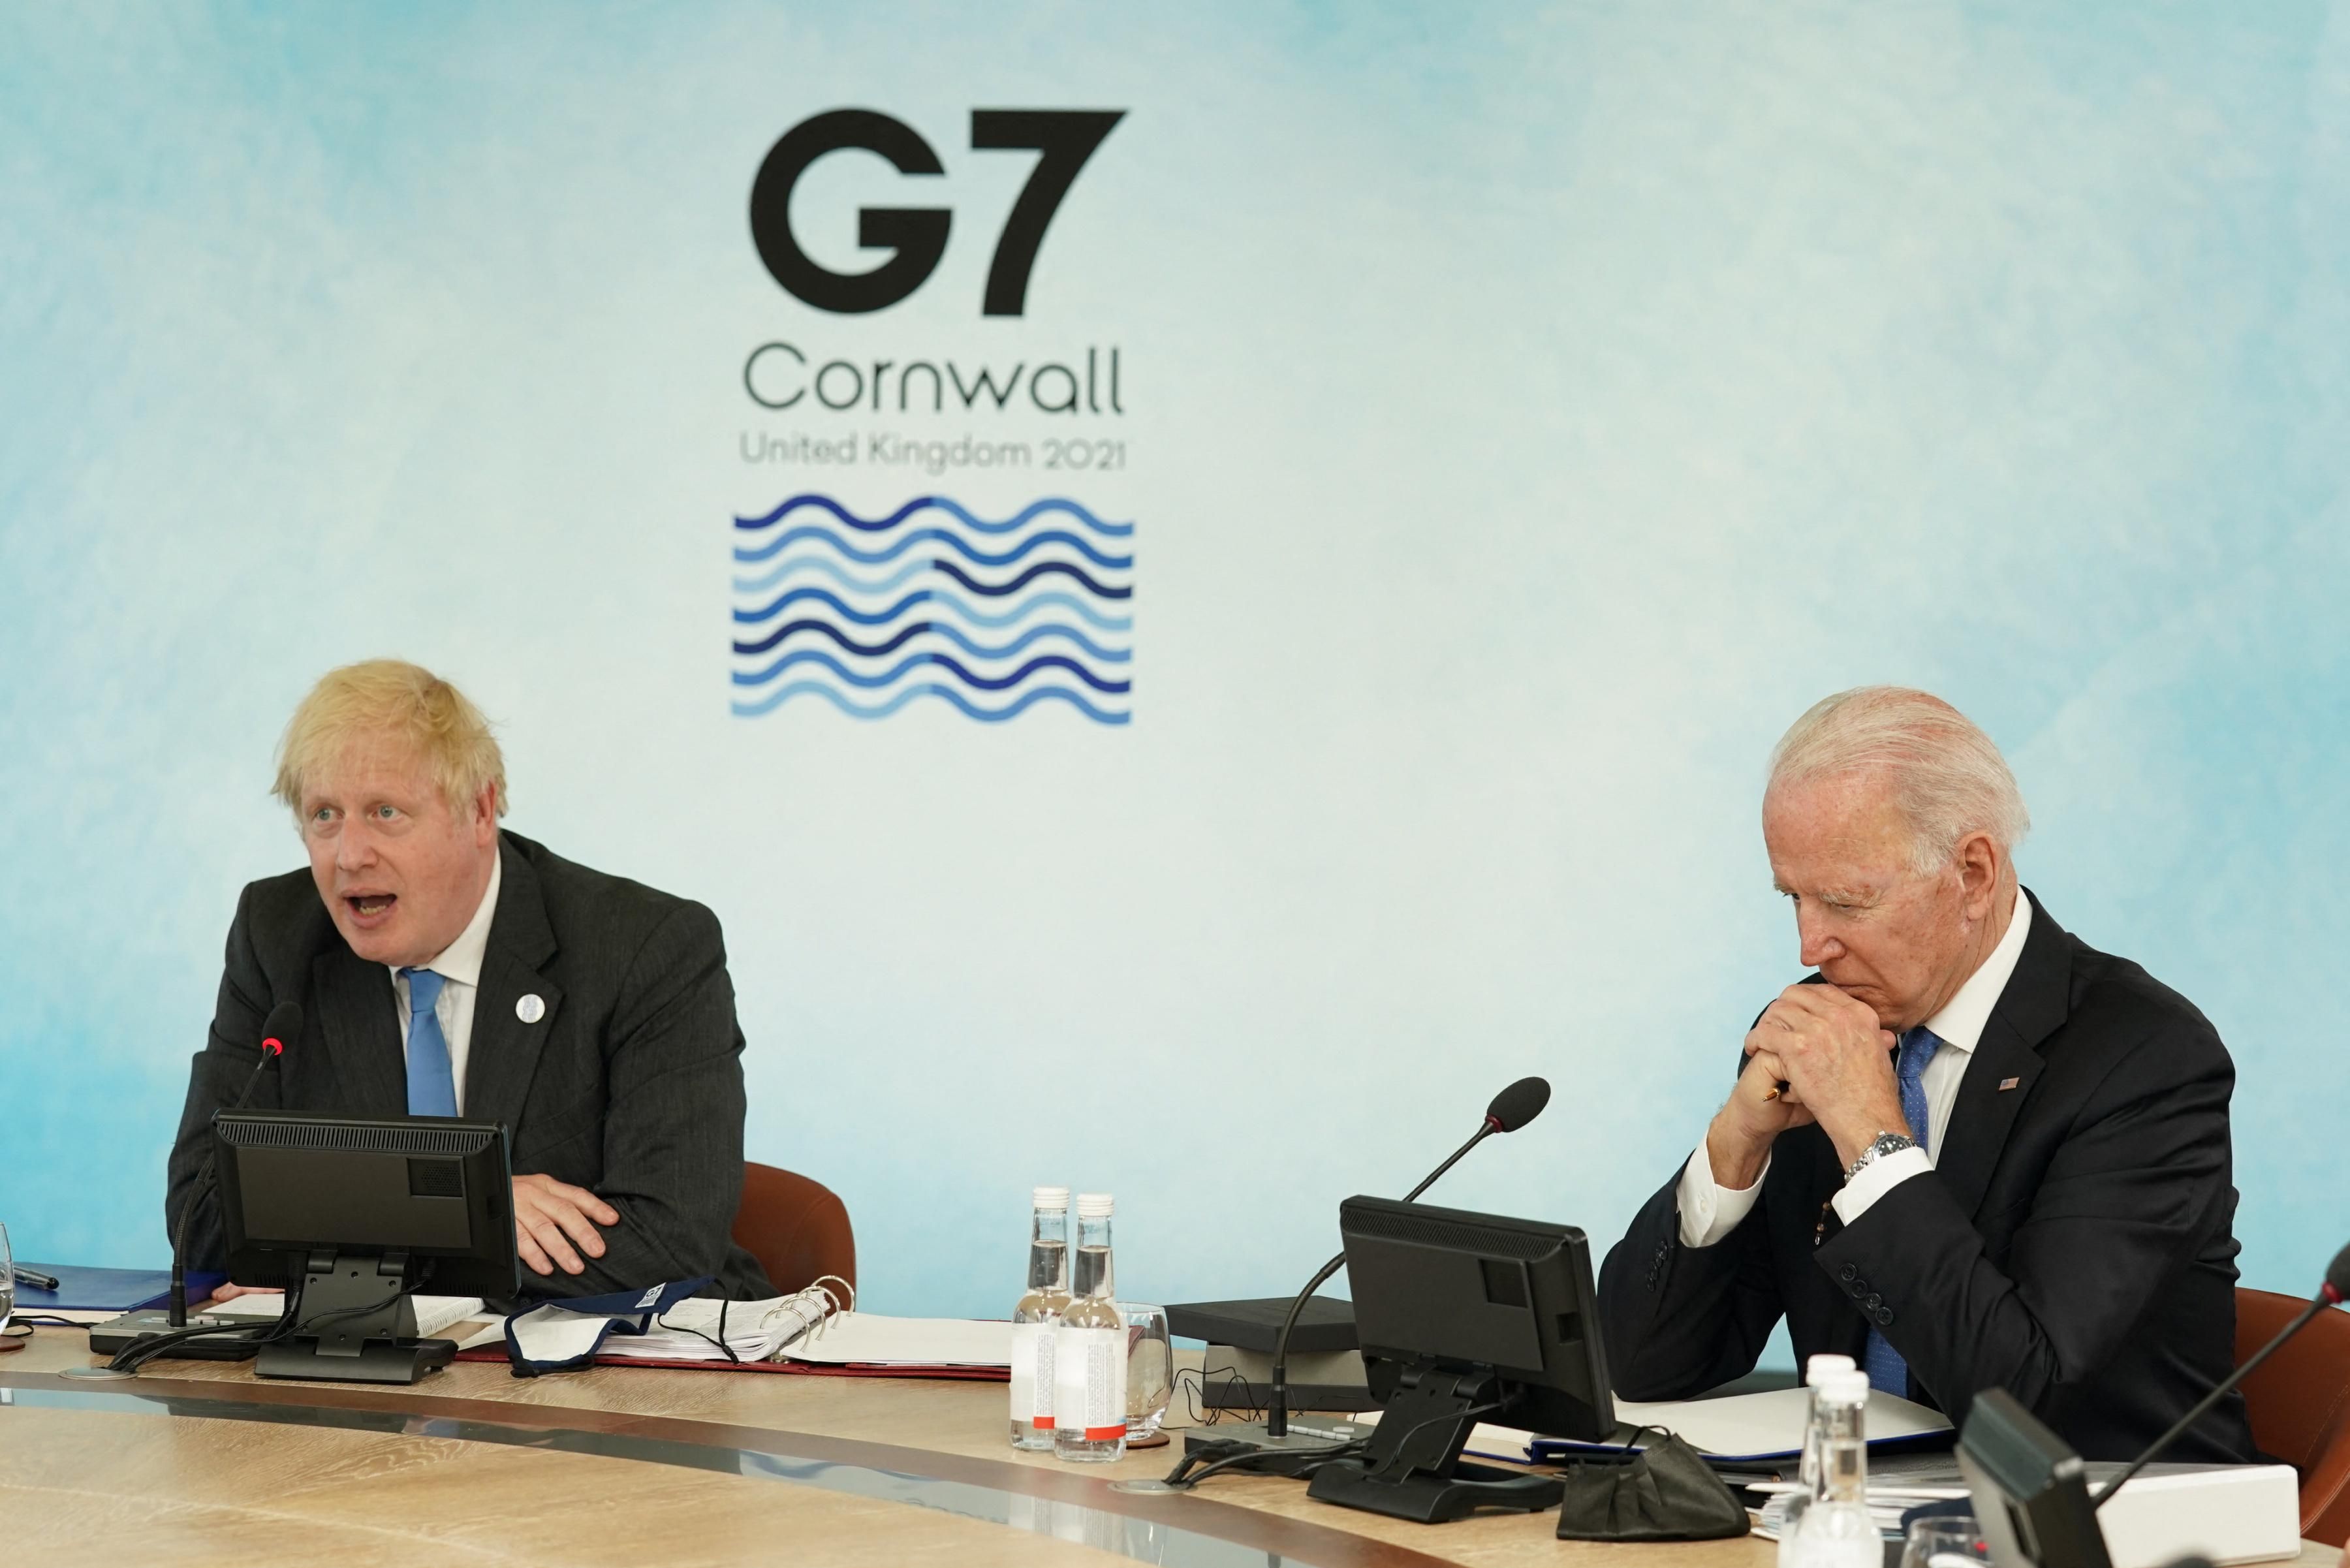 U.K. Prime Minister Boris Johnson sits alongside U.S. President Joe Biden